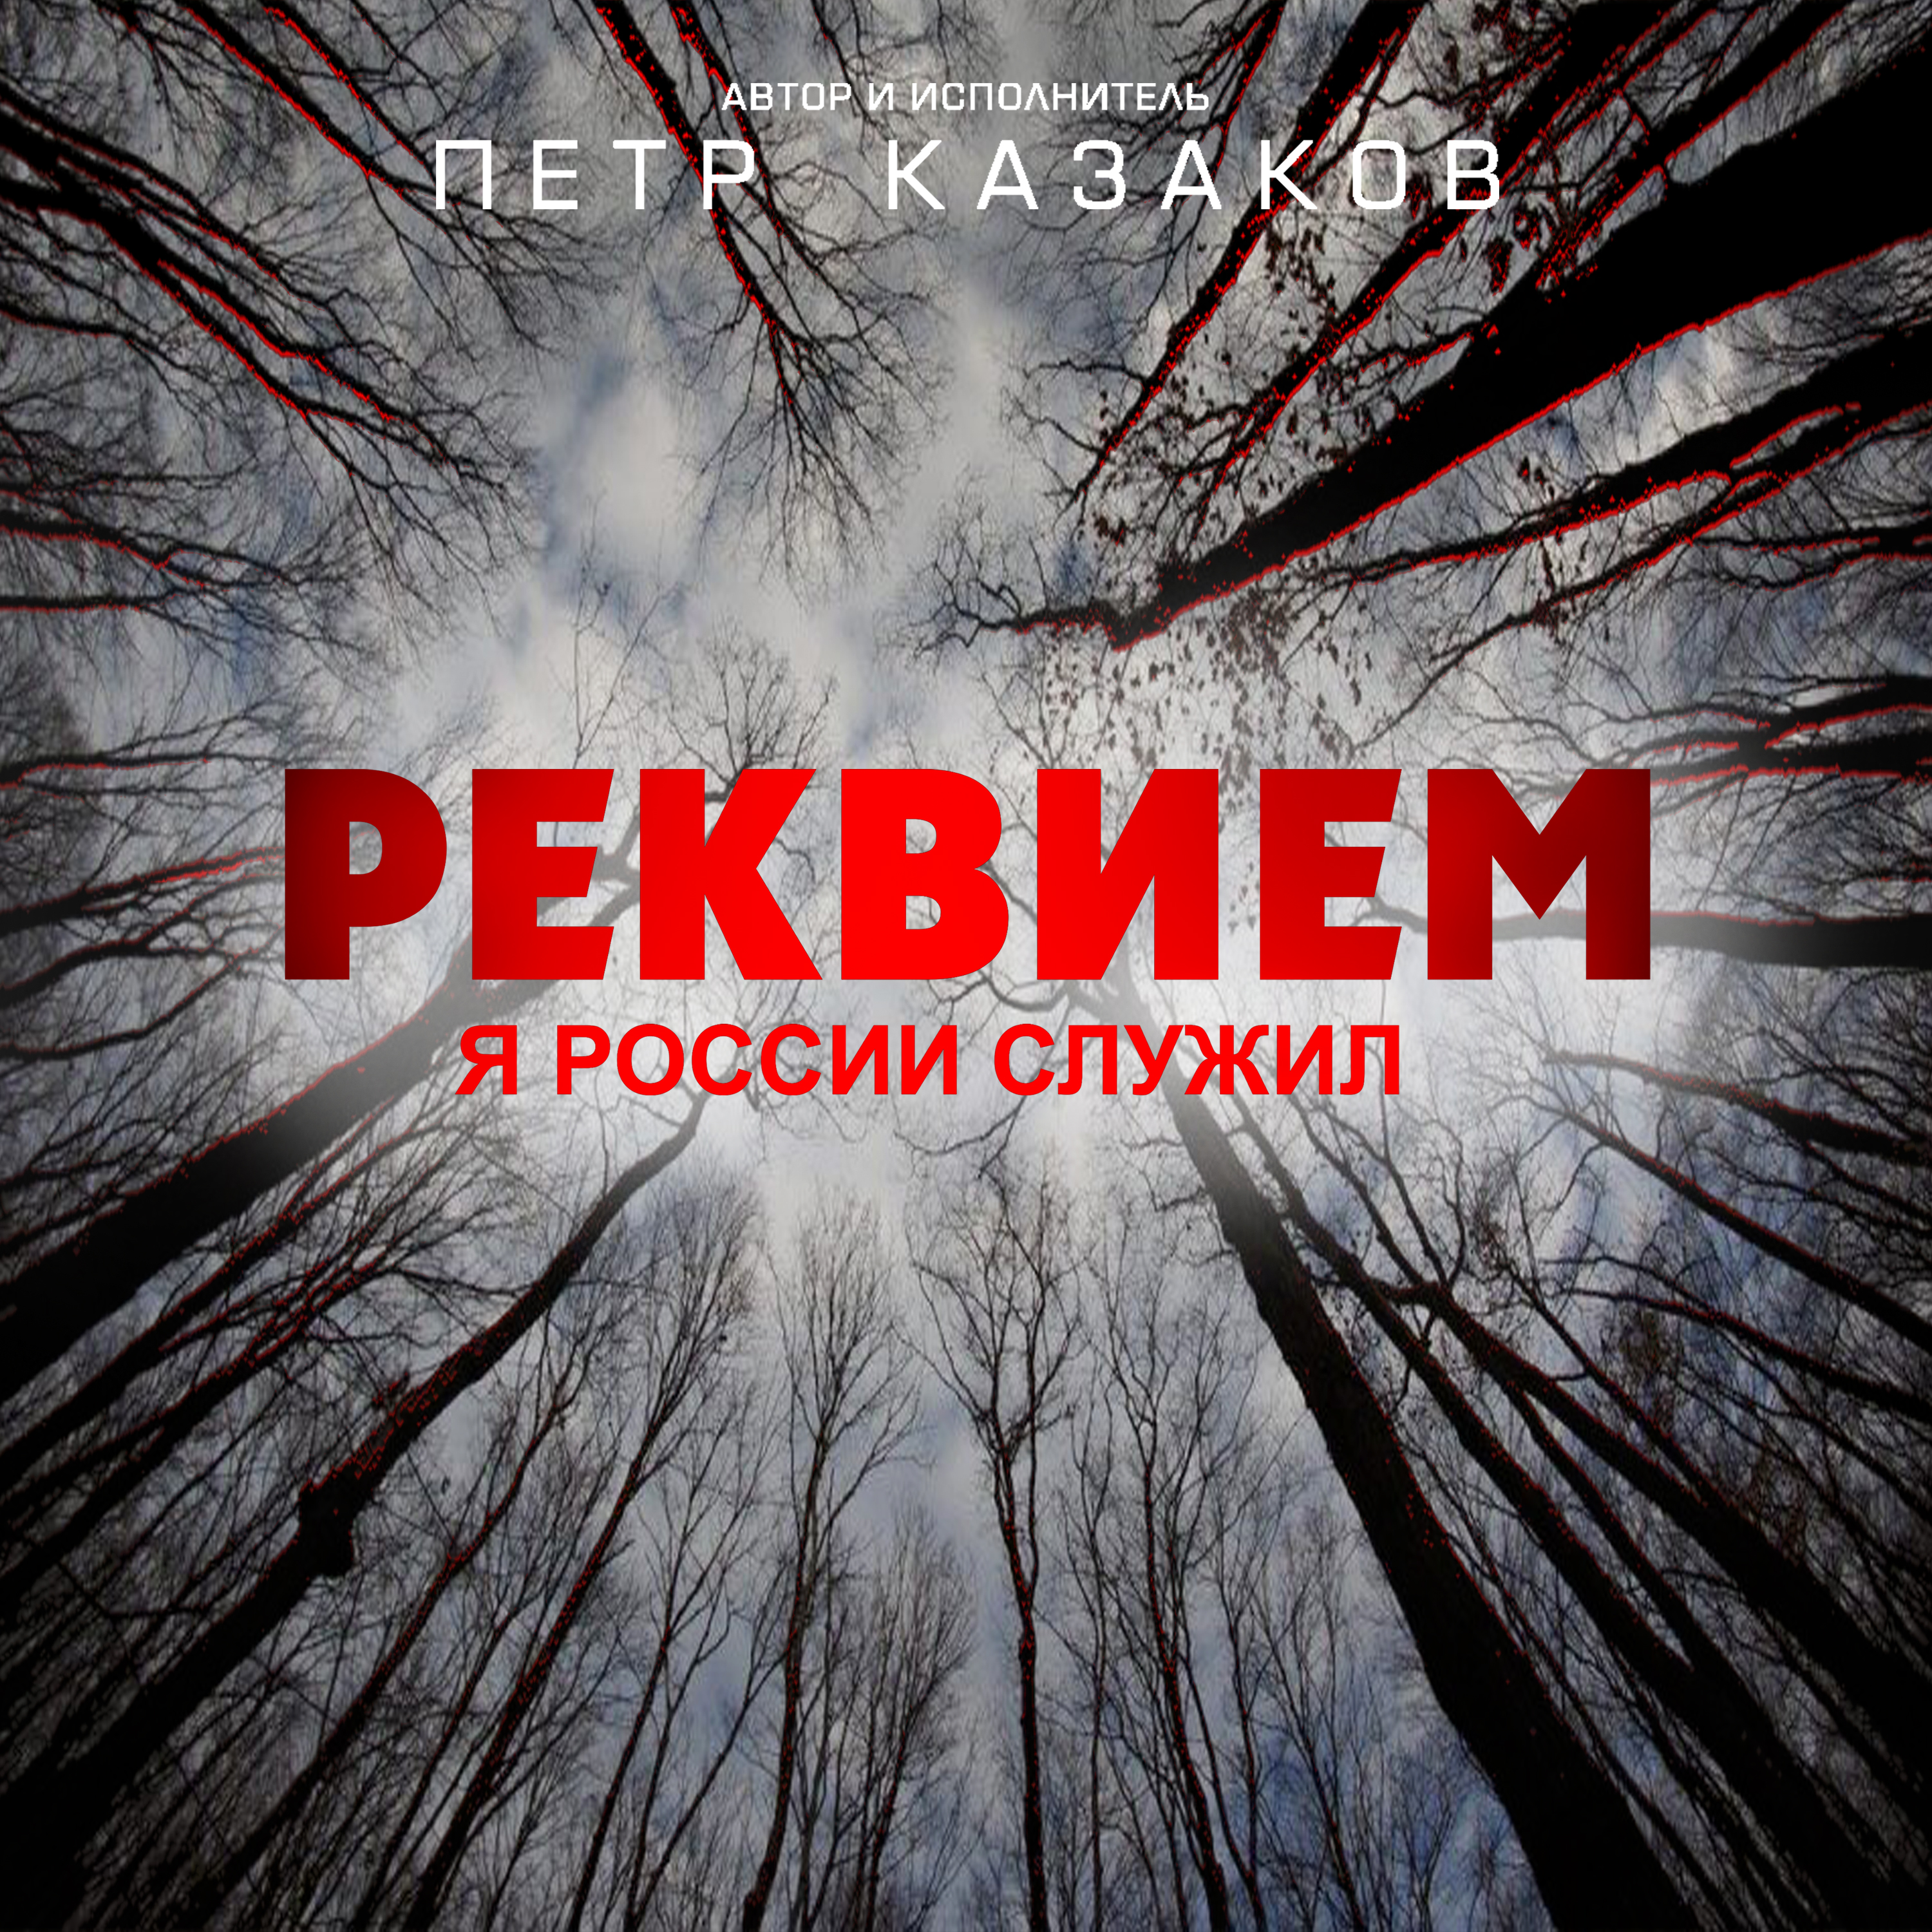 Новая песня Петра Казакова 